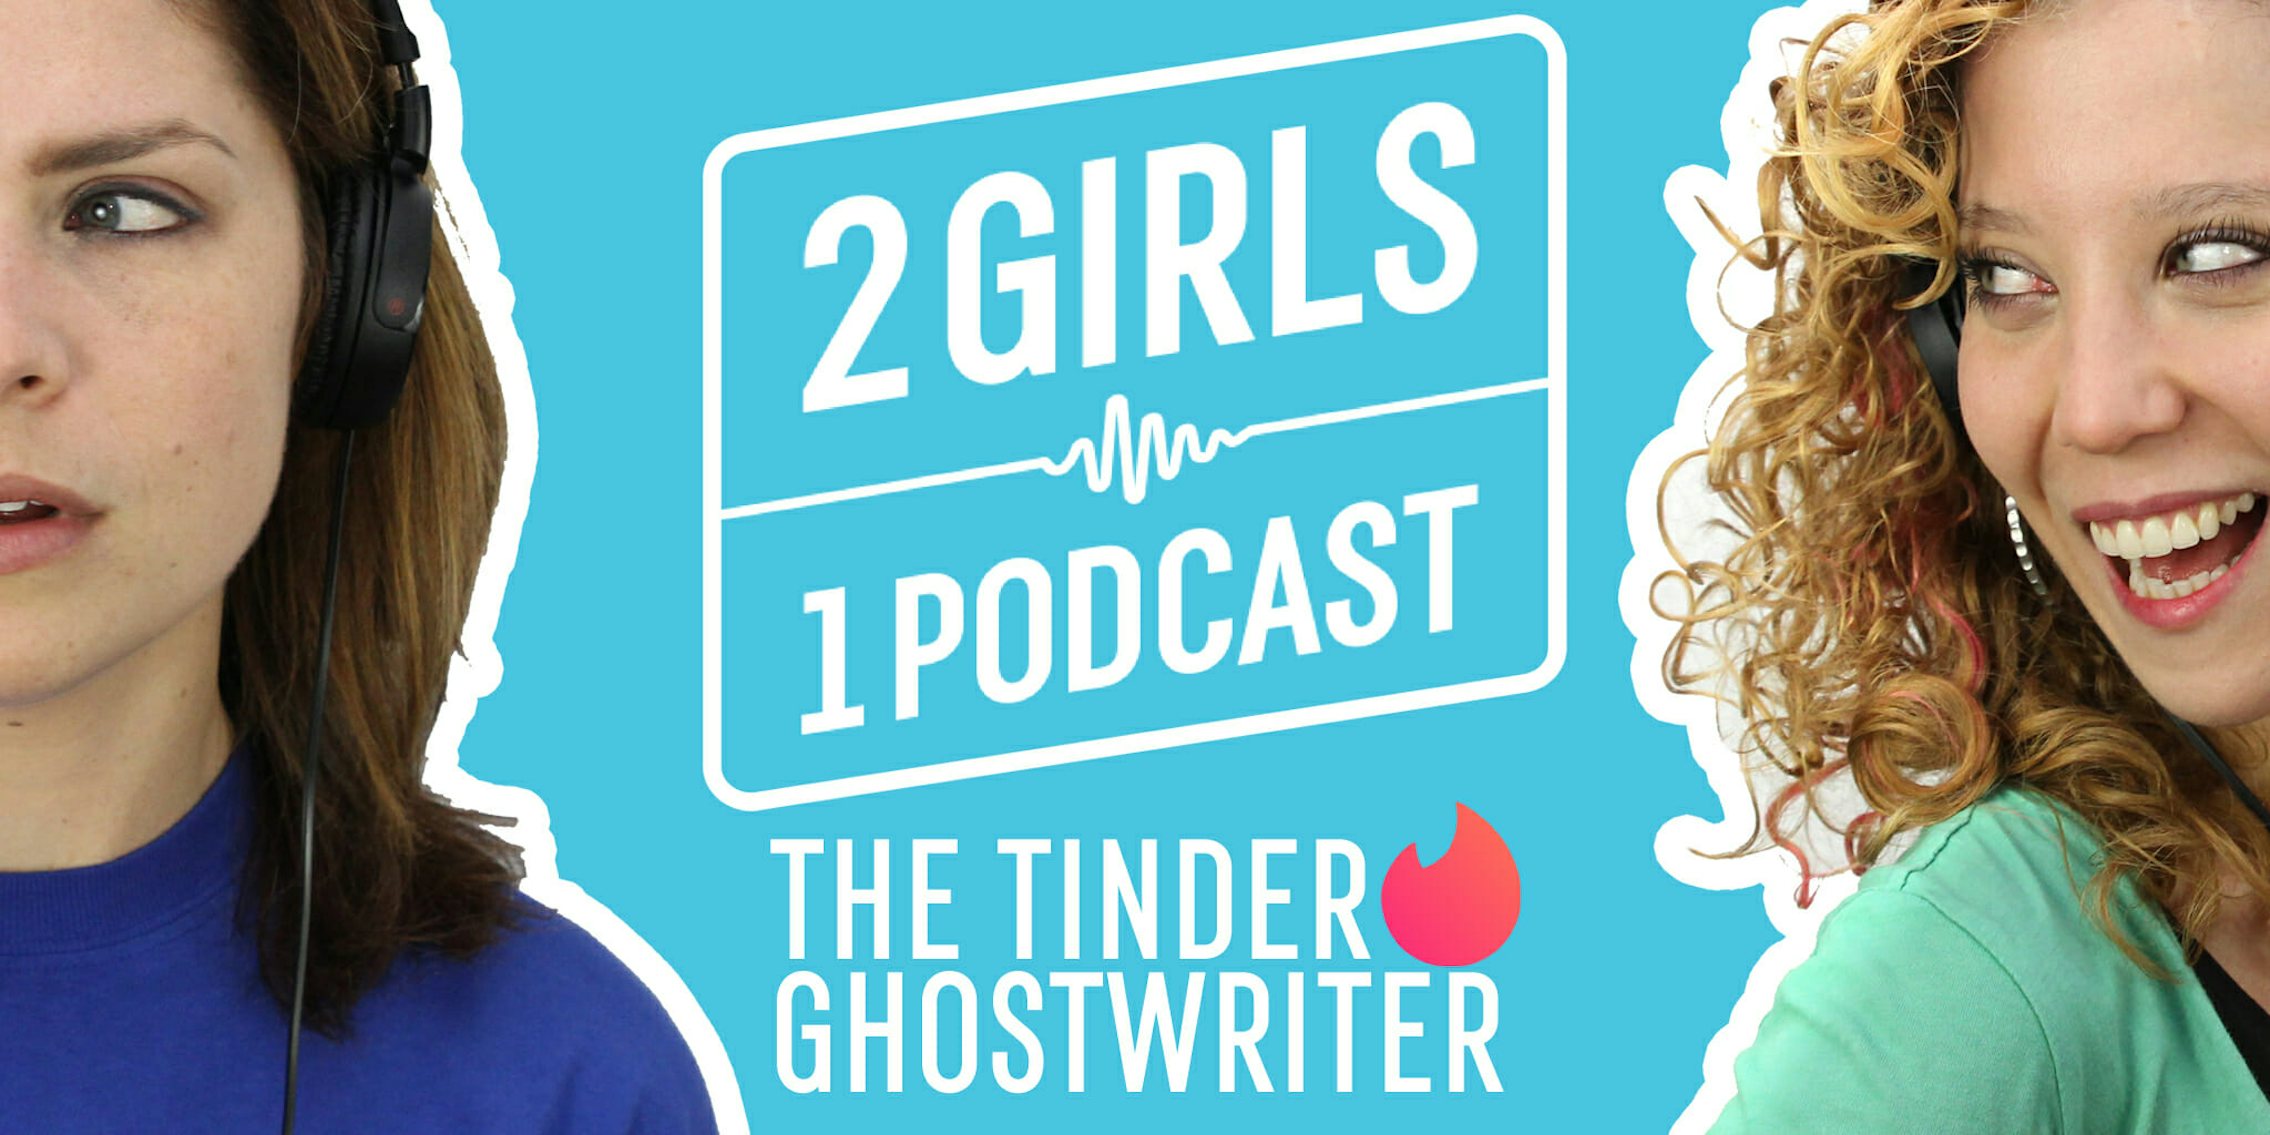 2 Girls 1 Podcast TINDER GHOSTWRITER